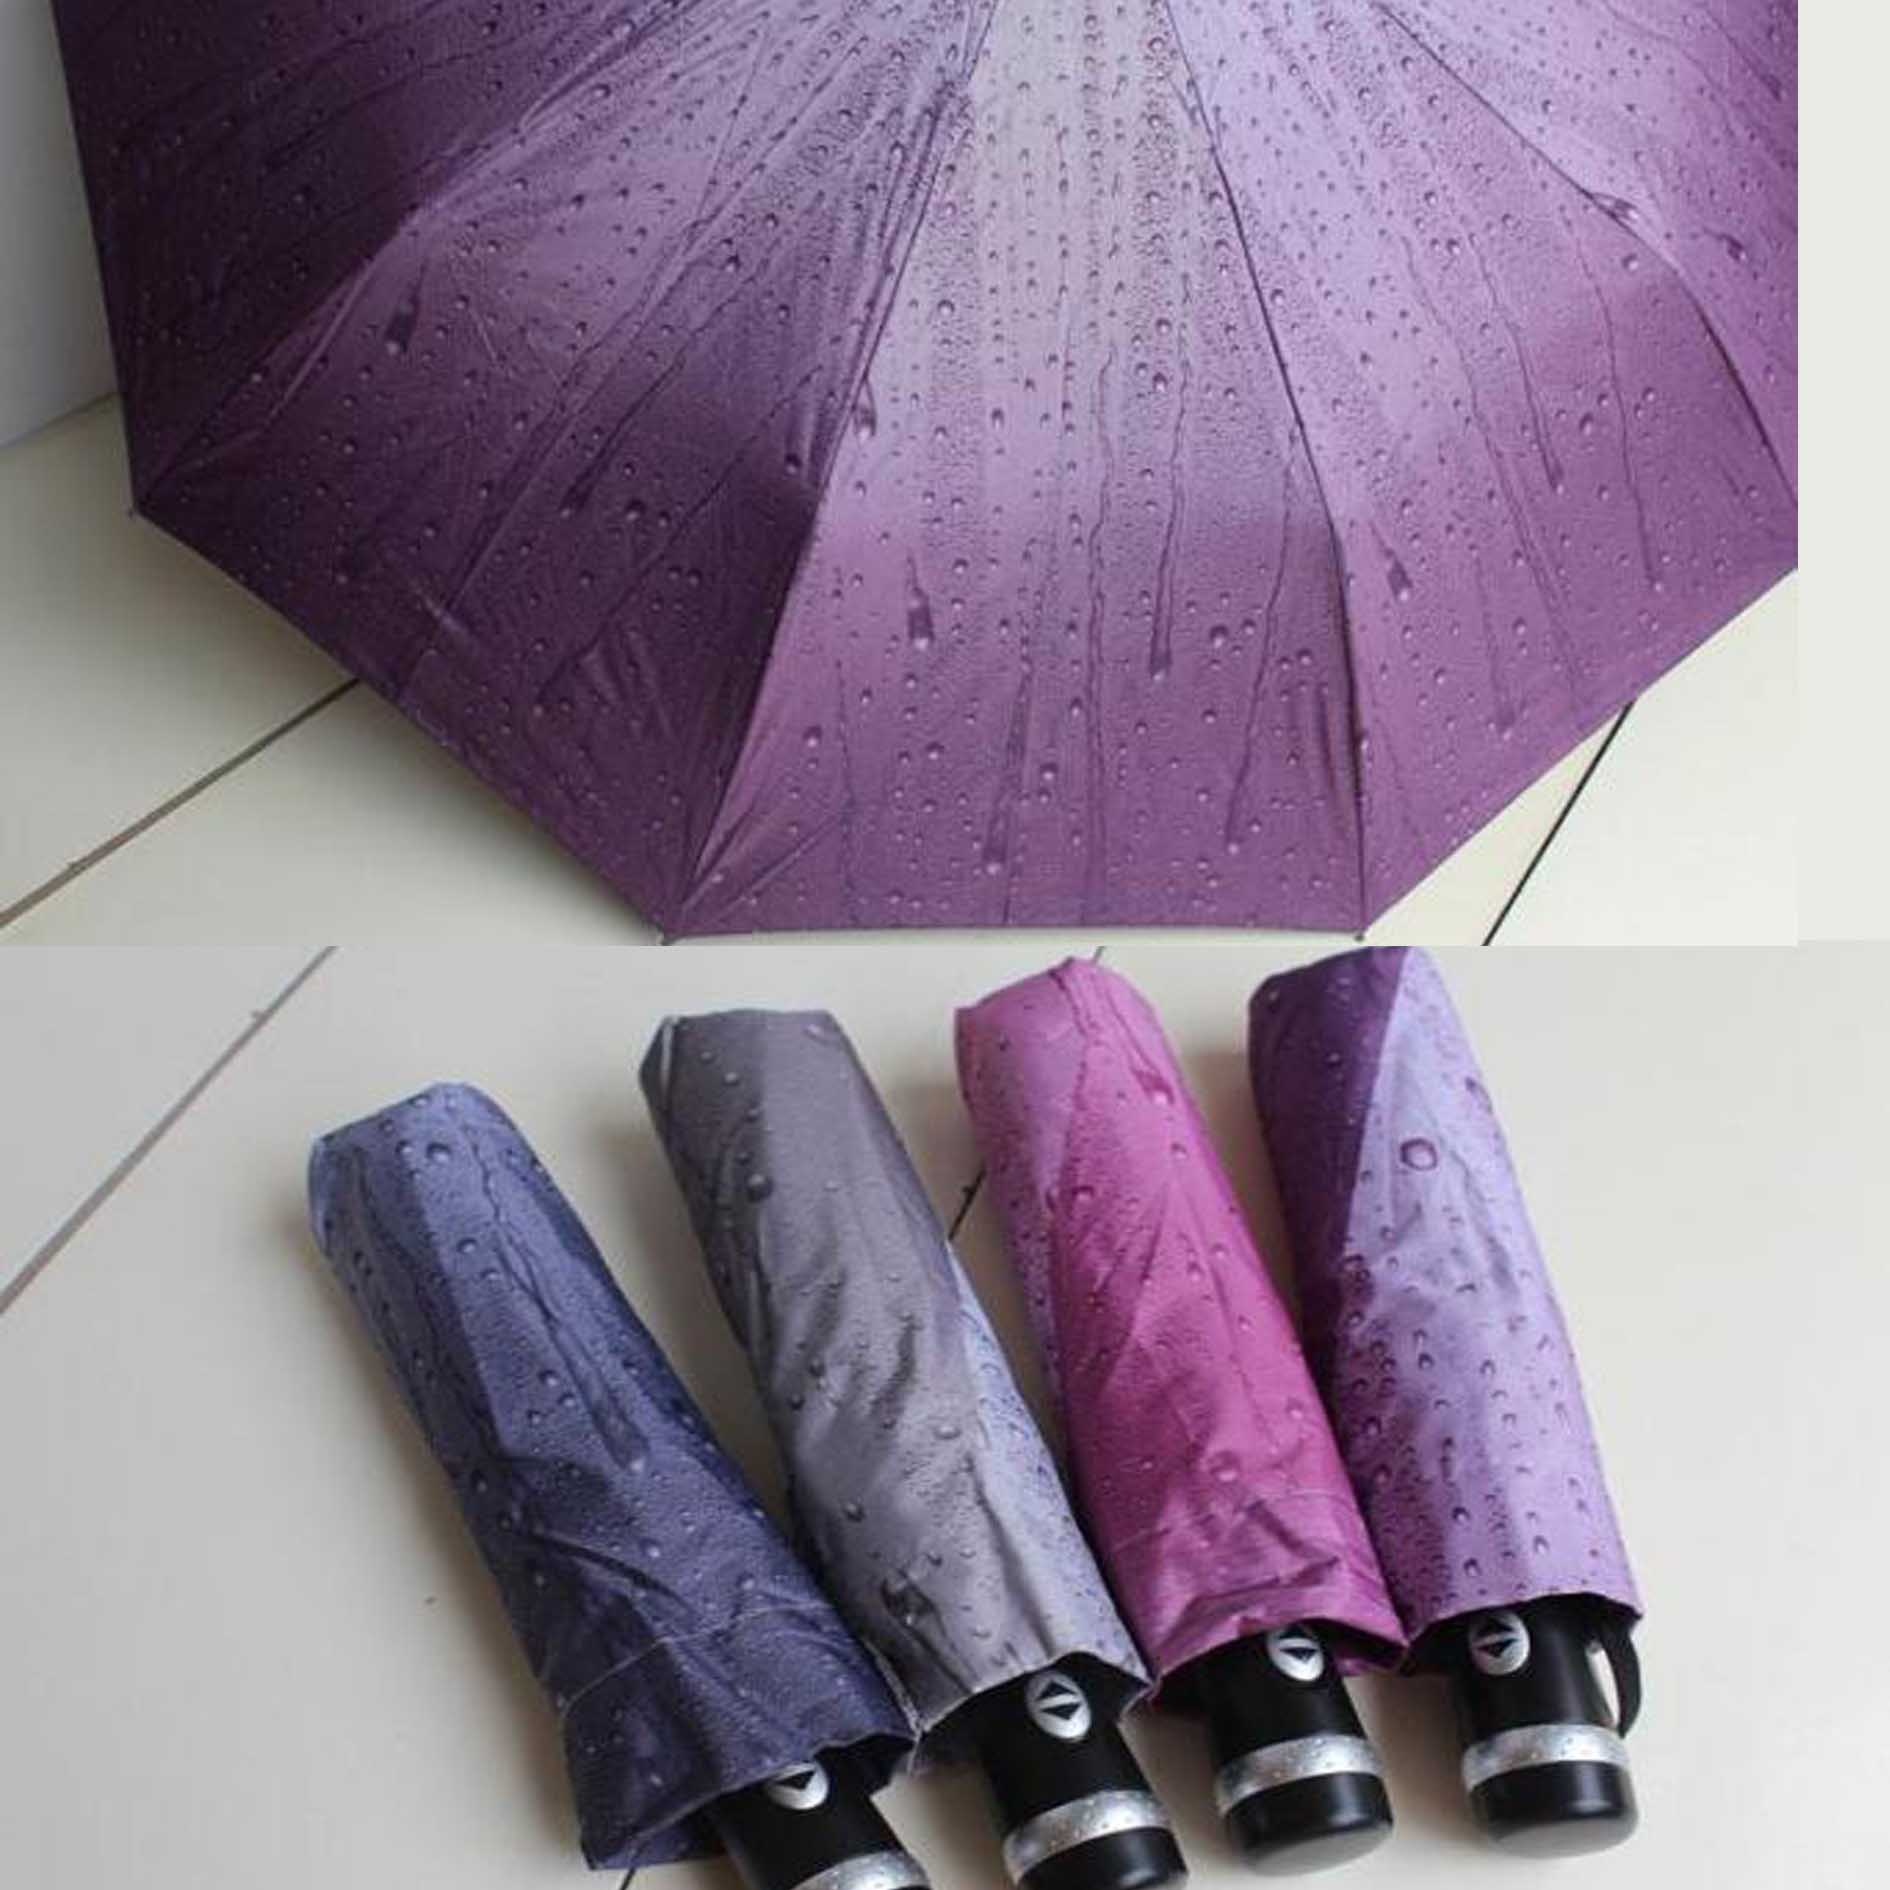 innovative automatic folding umbrella